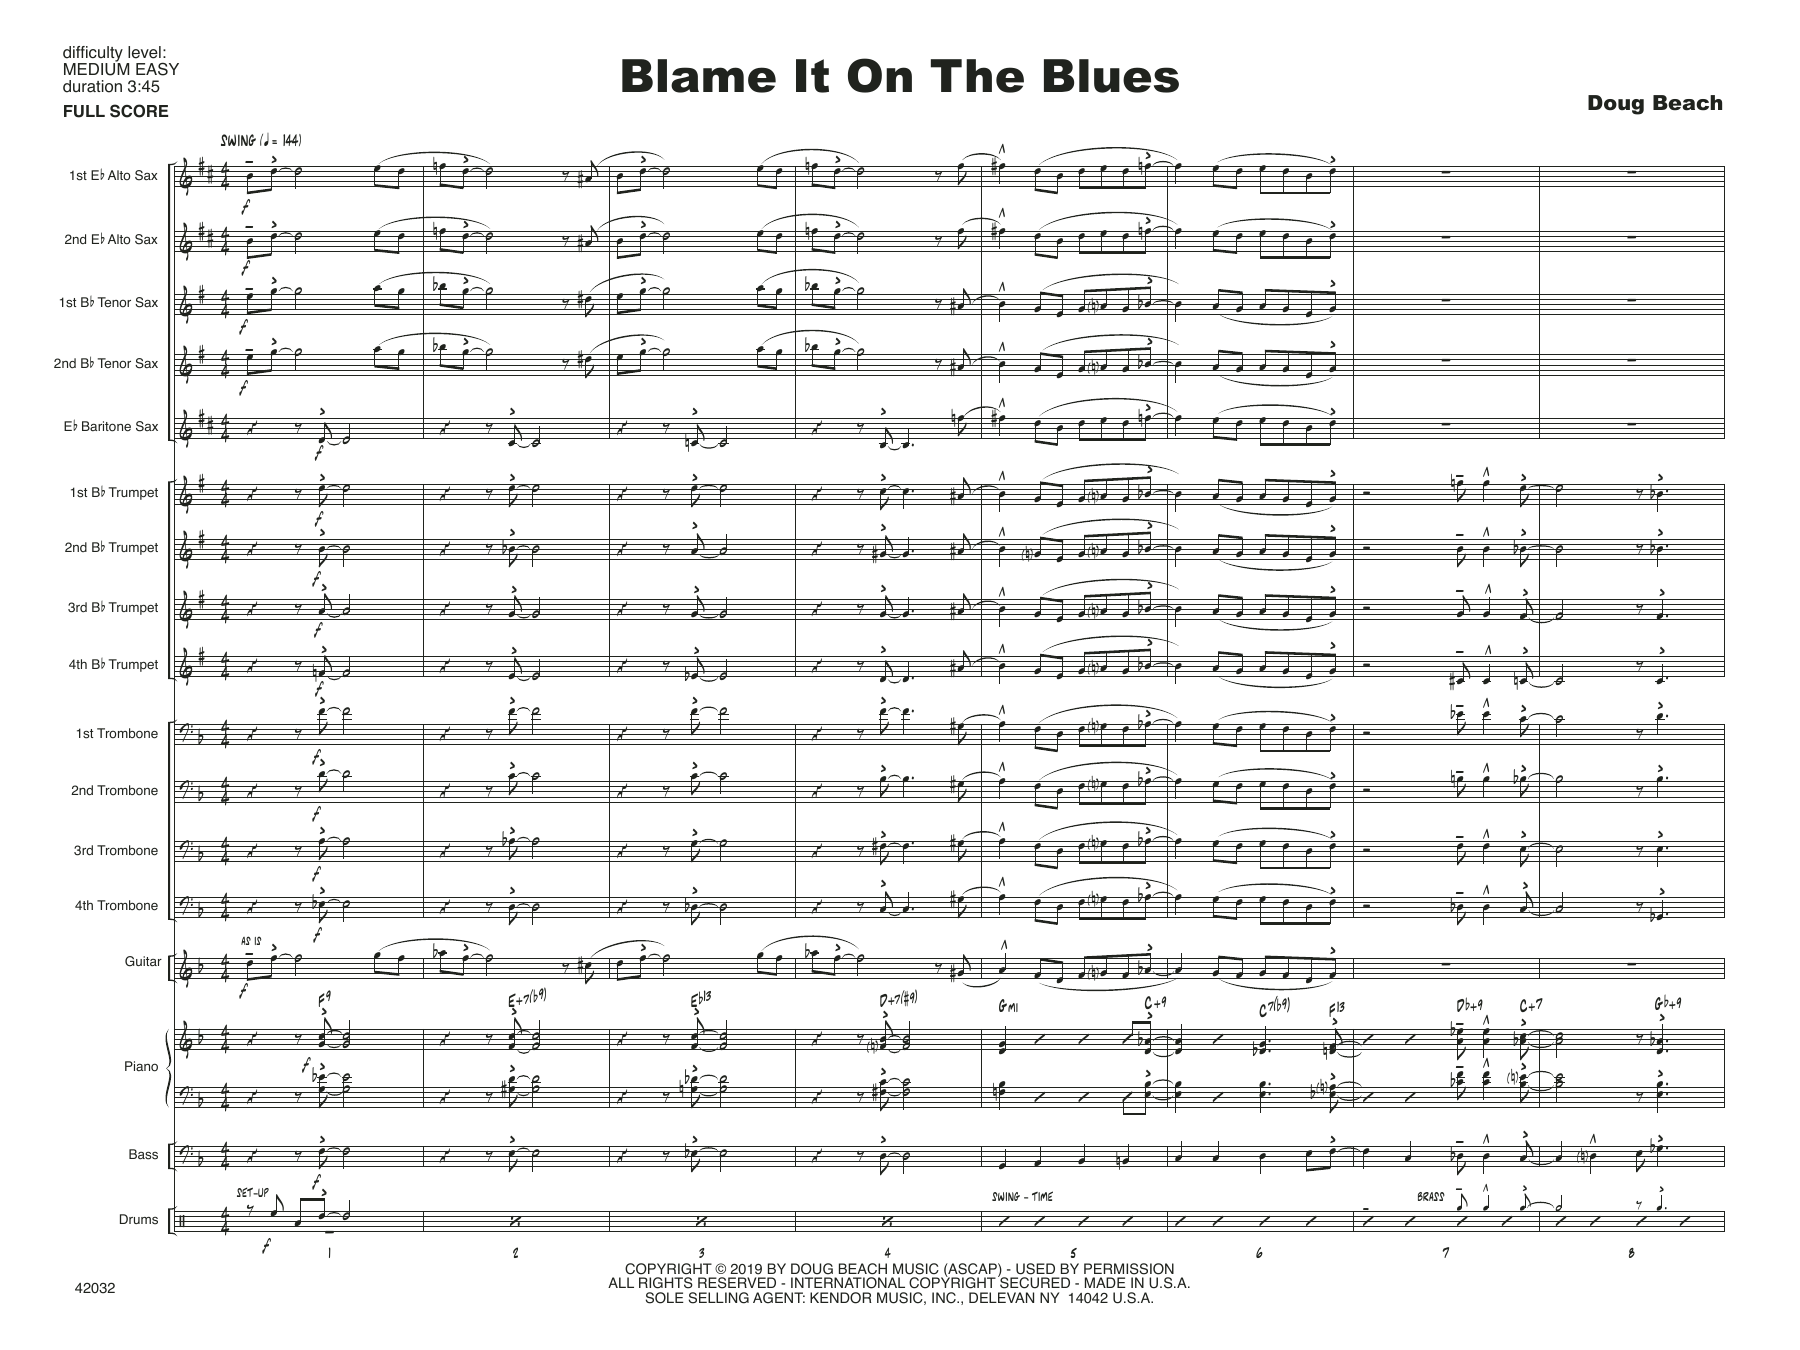 Download Doug Beach Blame It On The Blues - Full Score Sheet Music